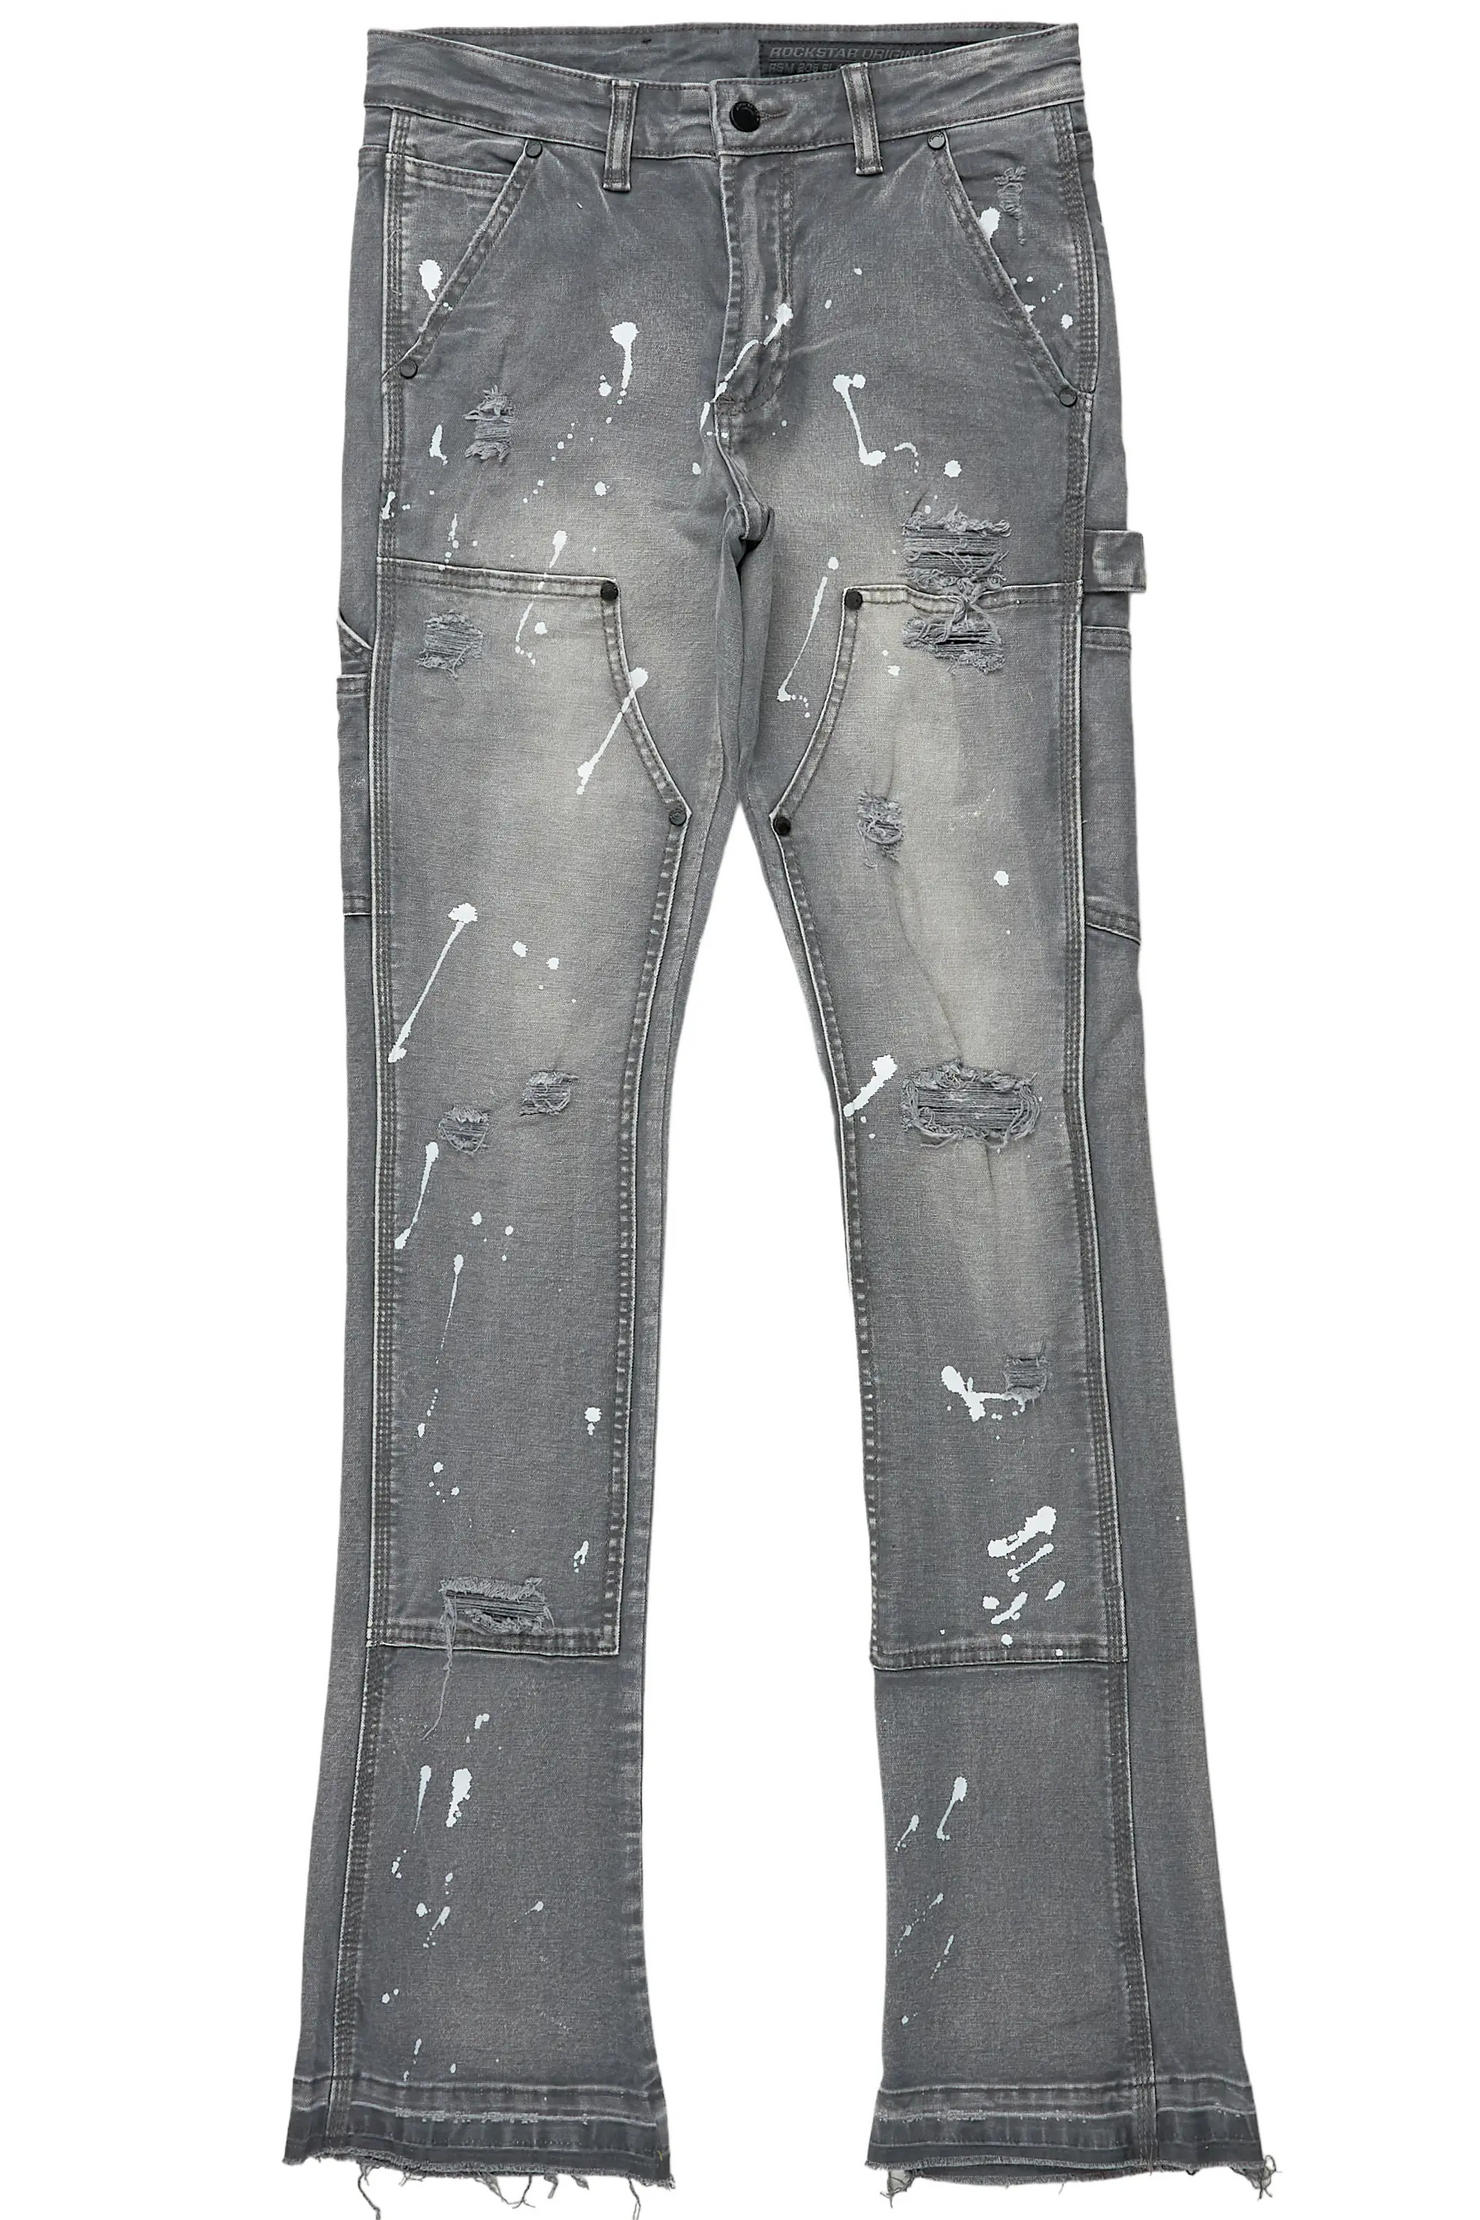 Thorton Grey Stacked Flare Jean